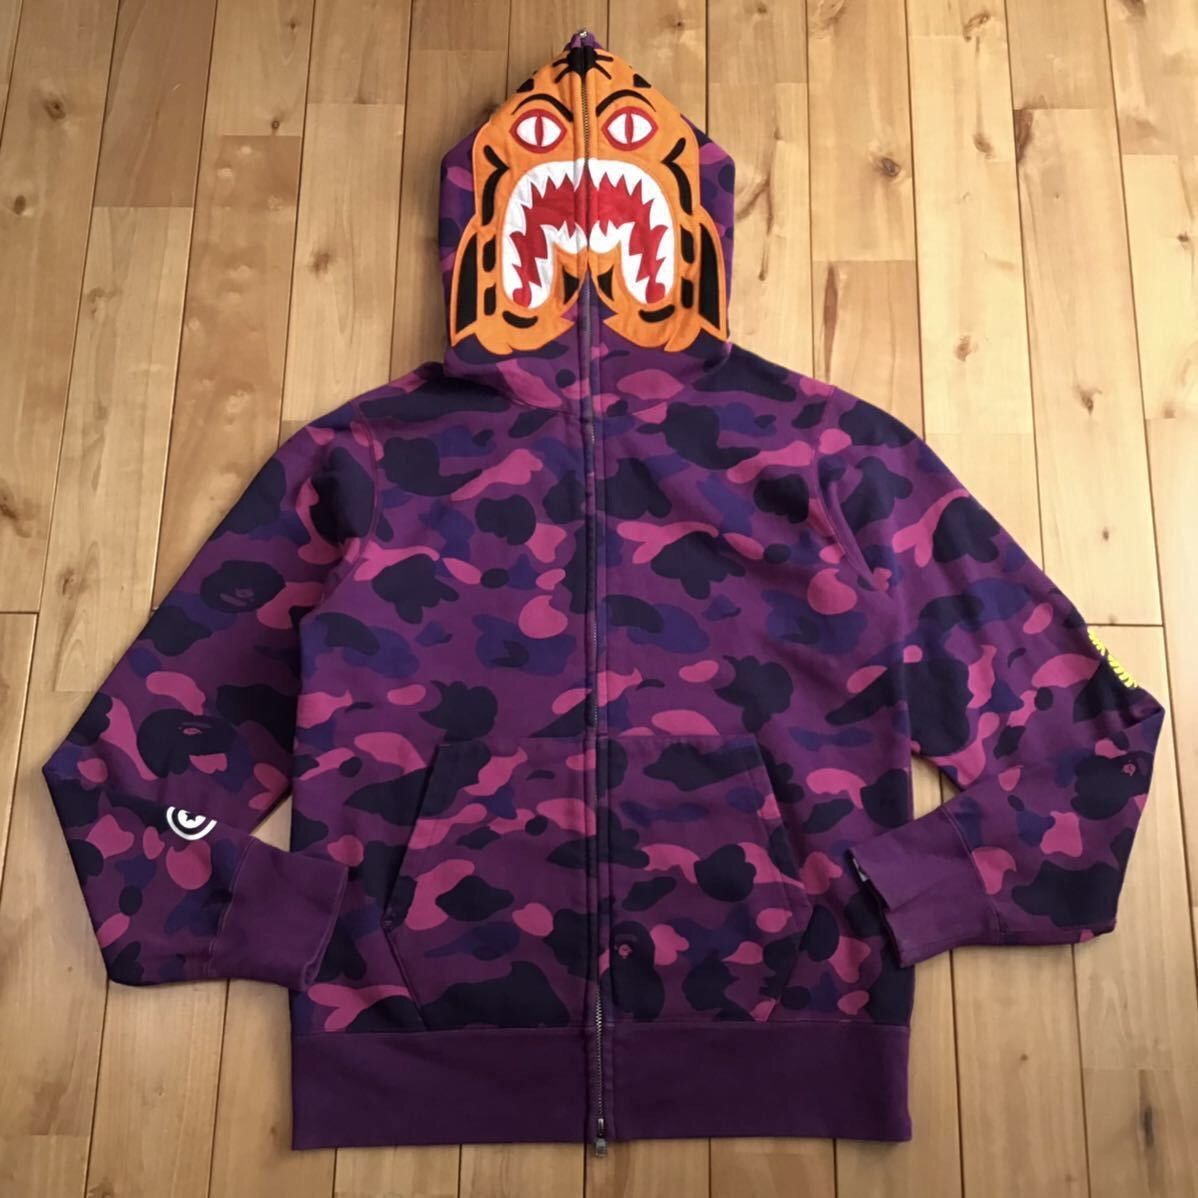 Bape BAPE Tiger full zip hoodie purple camo a bathing ape | Grailed